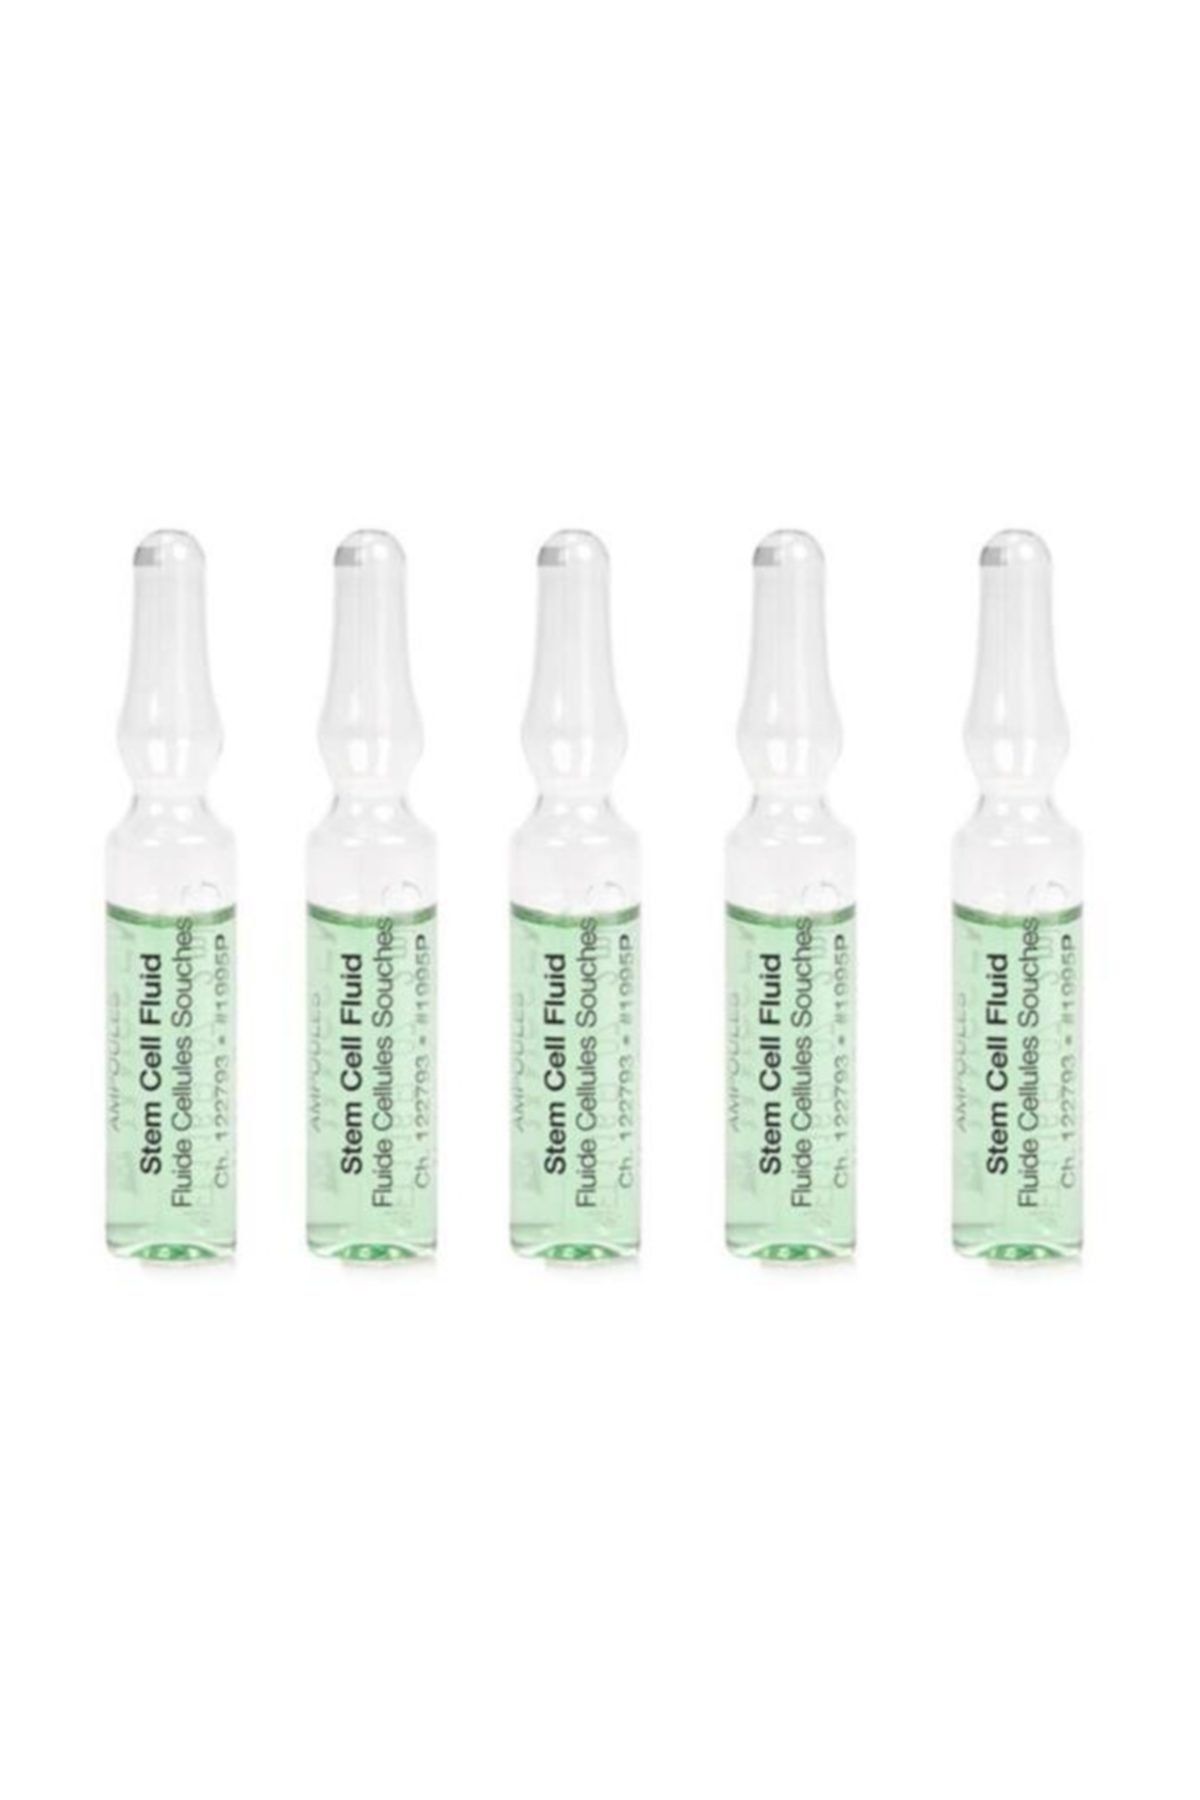 Janssen Cosmetics Steem Cell Fluid Ampul (5 X 2ml )